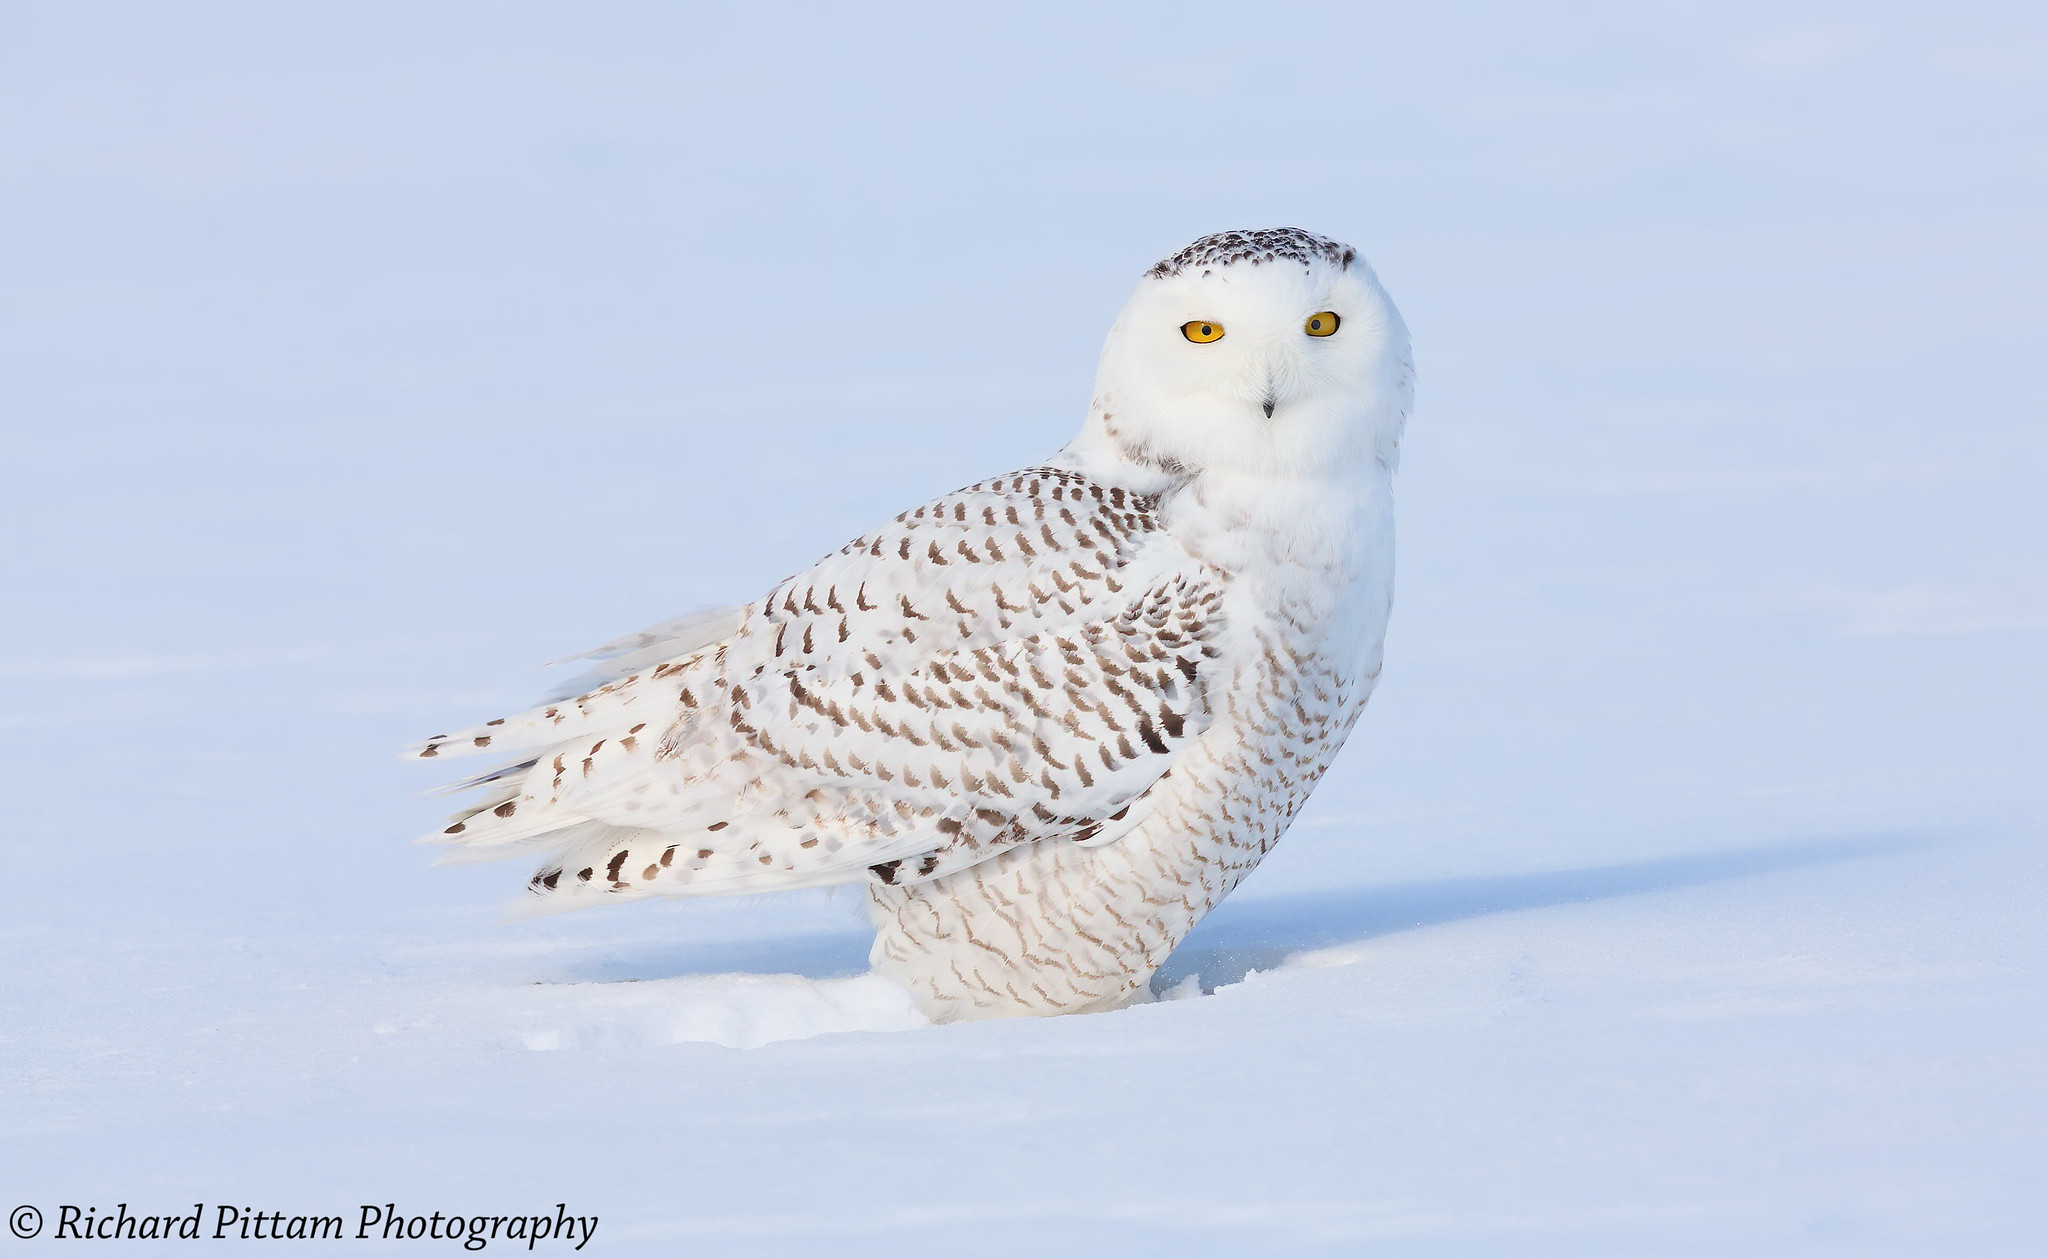 2014 shots re-processed - Snowy Owl, Ottawa